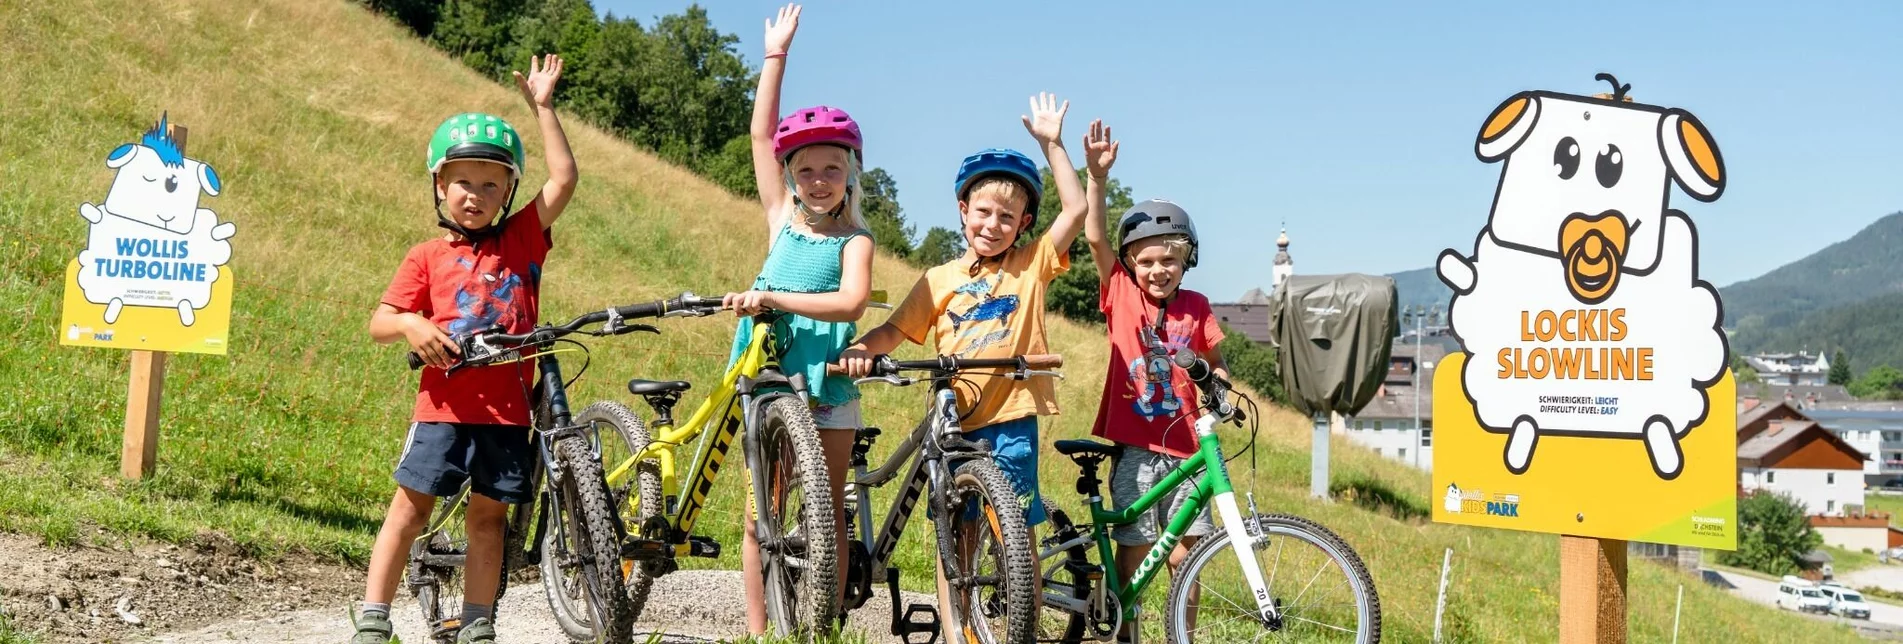 Mountain Biking Wollis Kids Park - Touren-Impression #1 | © Henrieke Ibing Photography